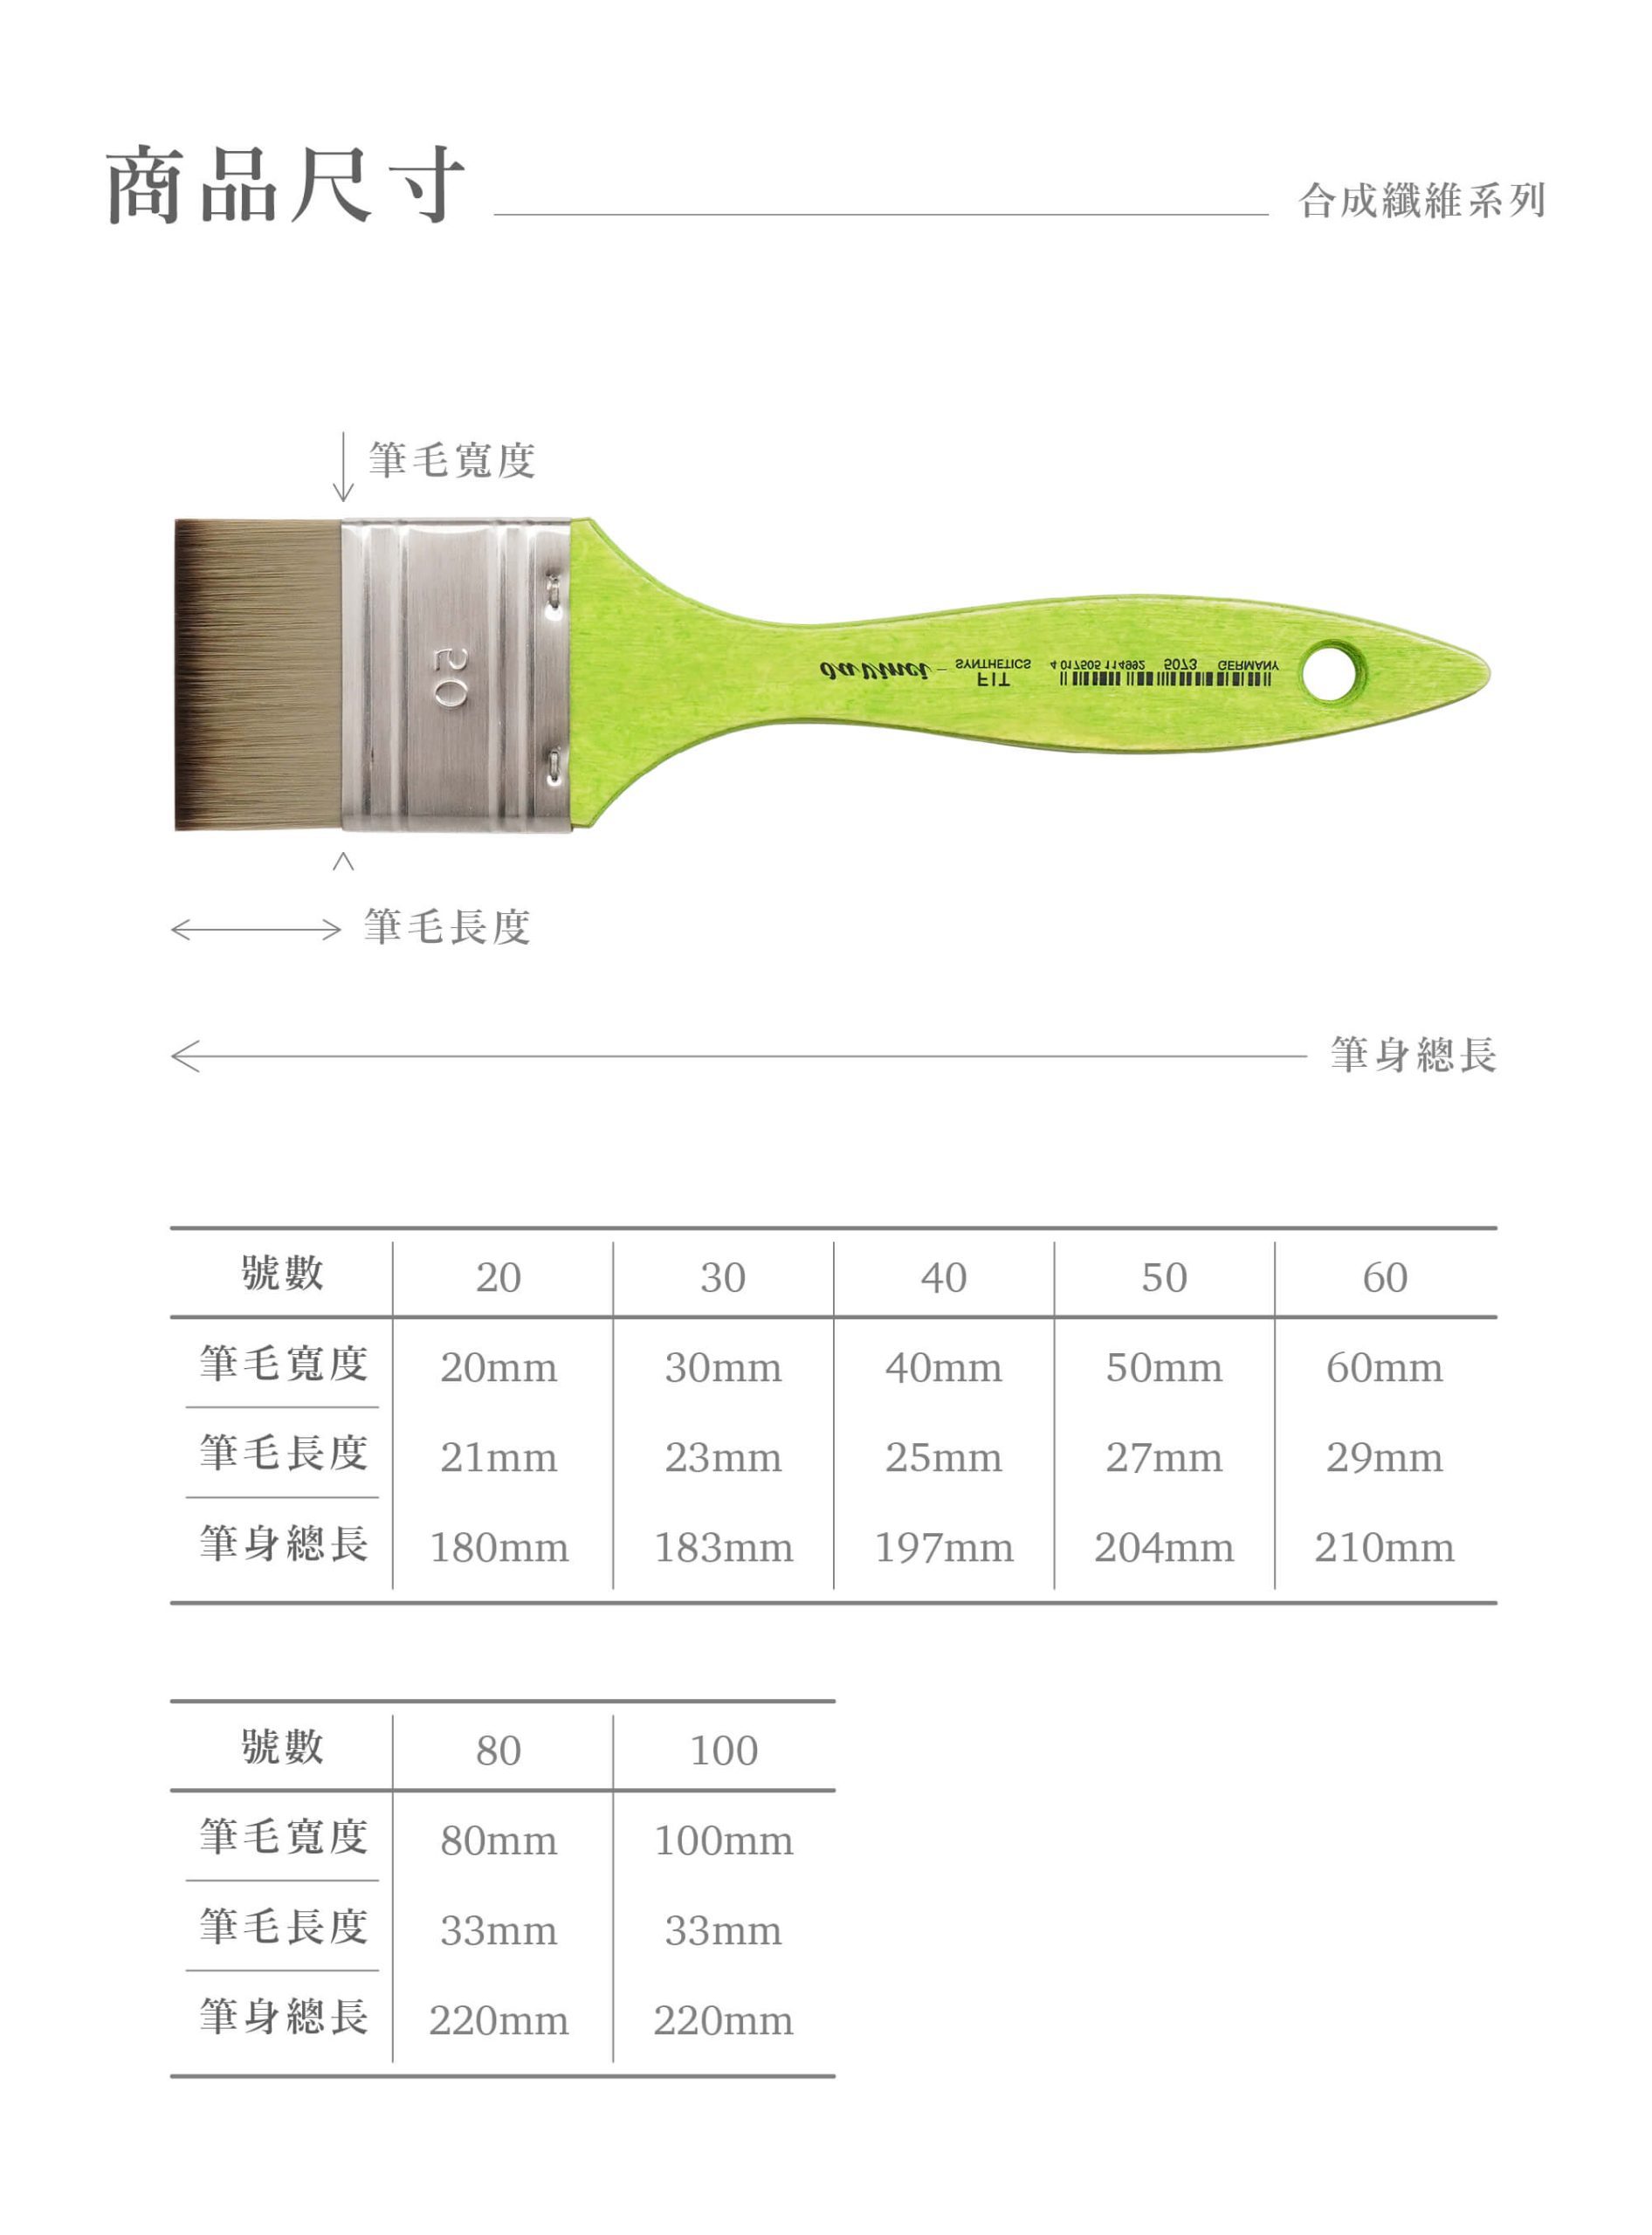 Da Vinci Fit Synthetic 20mm Mottler Brush, Series 5073